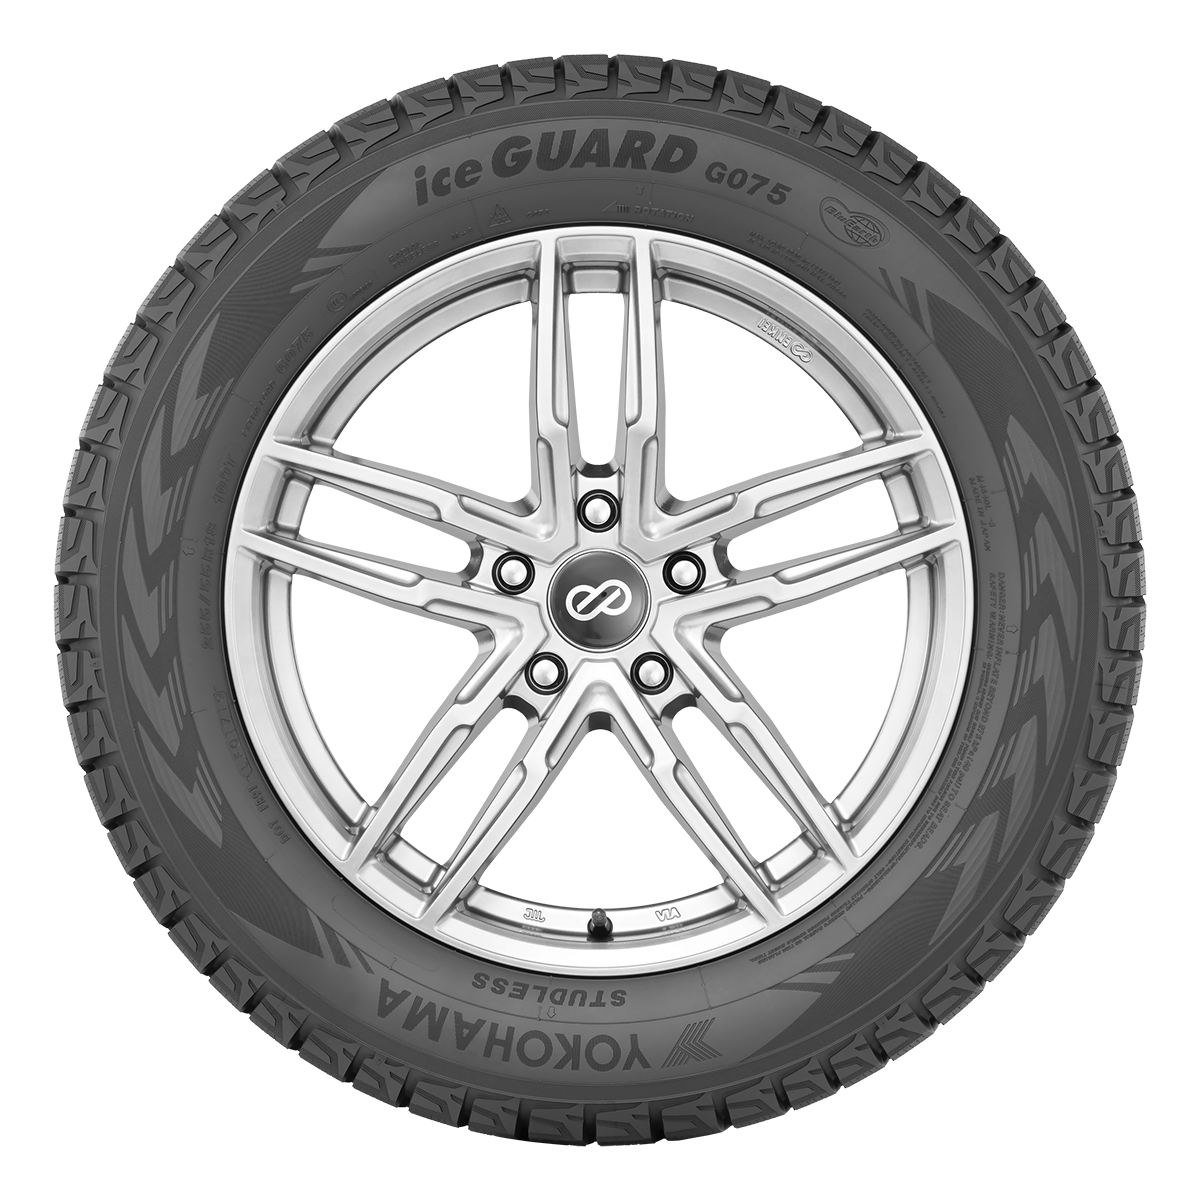 Yokohama iceGUARD G075 | Winter Tire - Mazda Shop | Genuine Mazda Parts and  Accessories Online